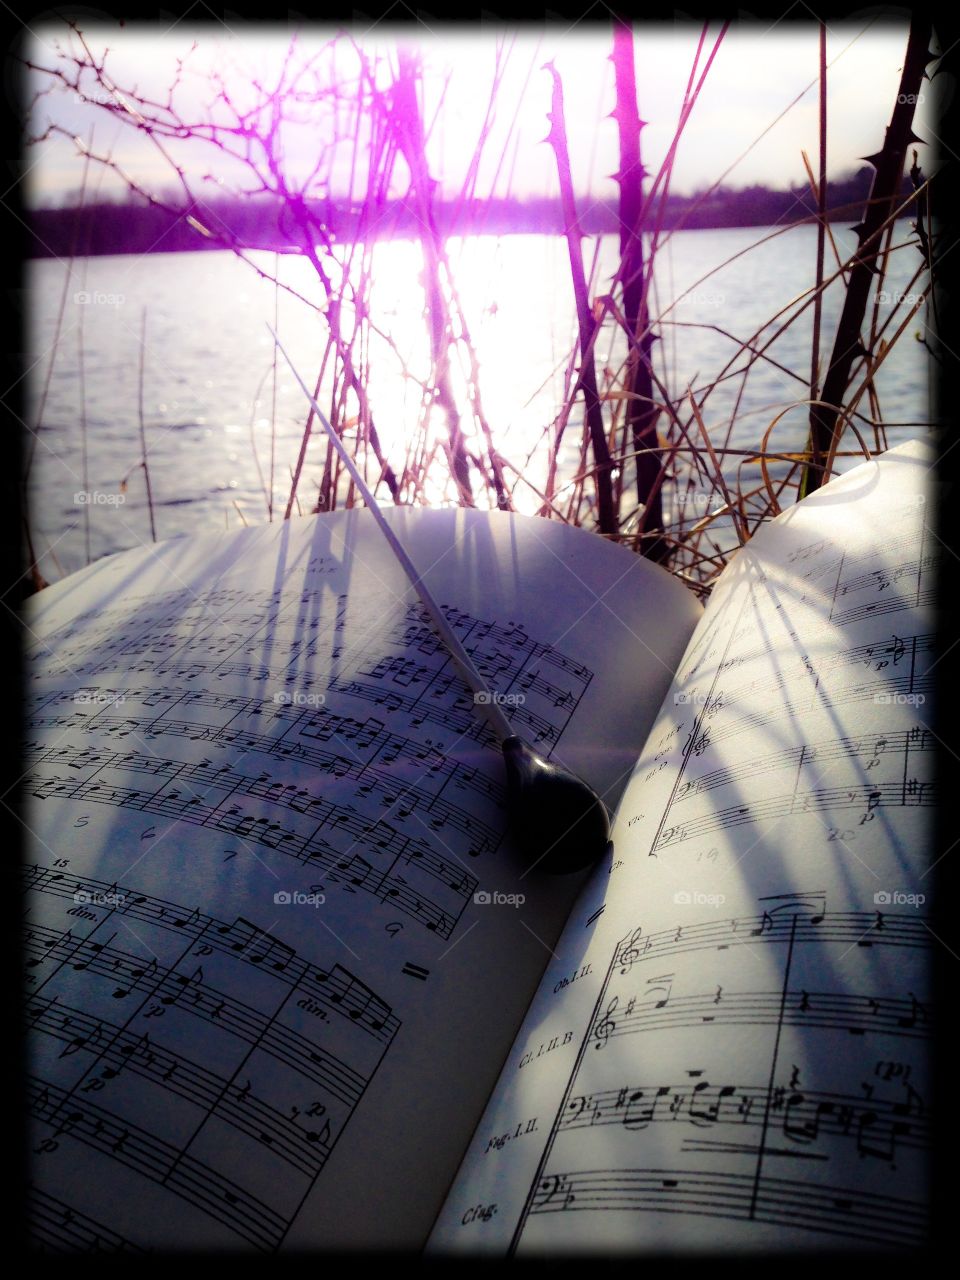 Conductors inspiration . Score study at the lake  